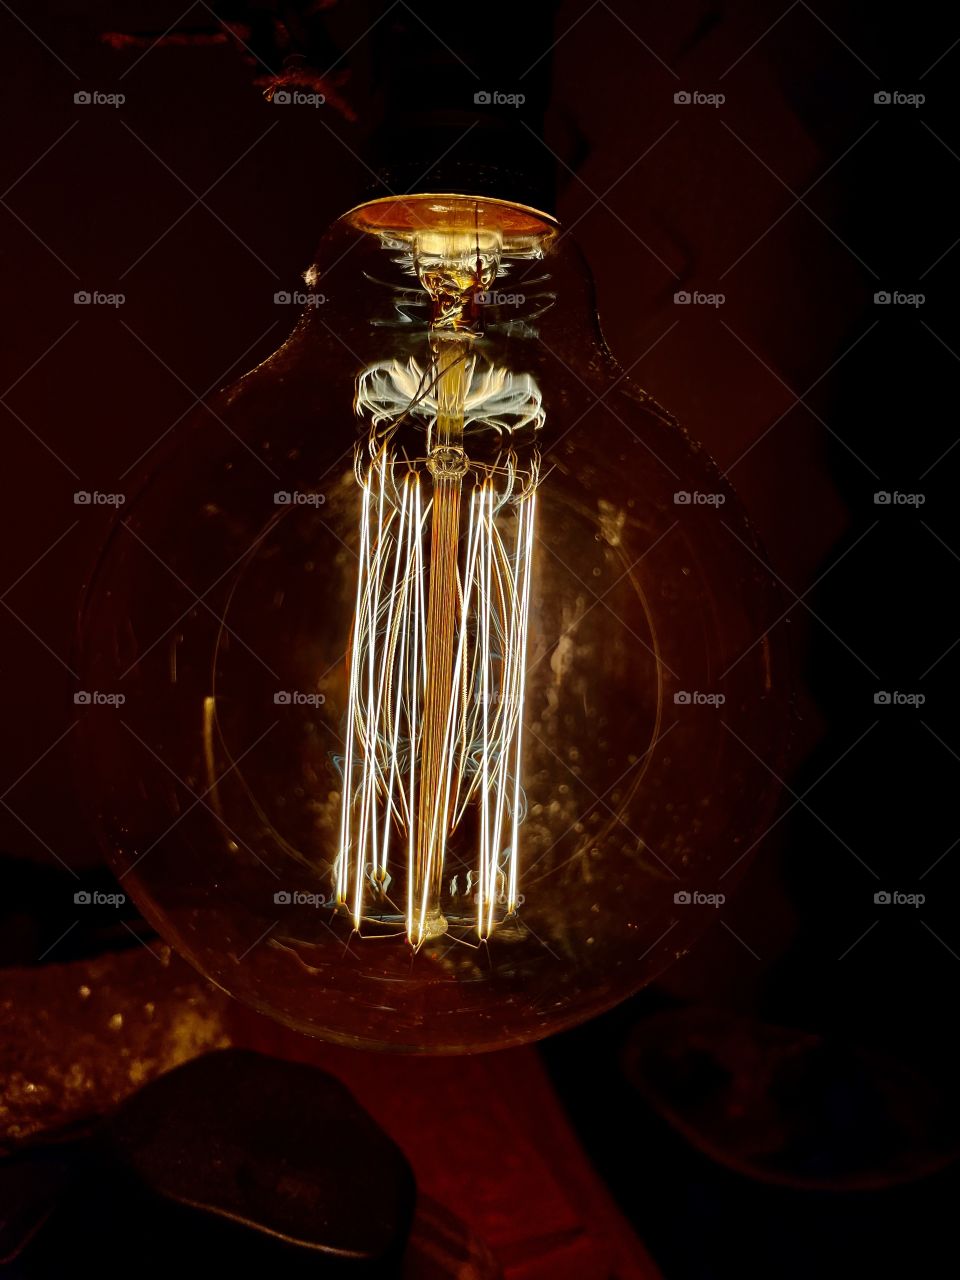 A lightbulb made of amber crystal